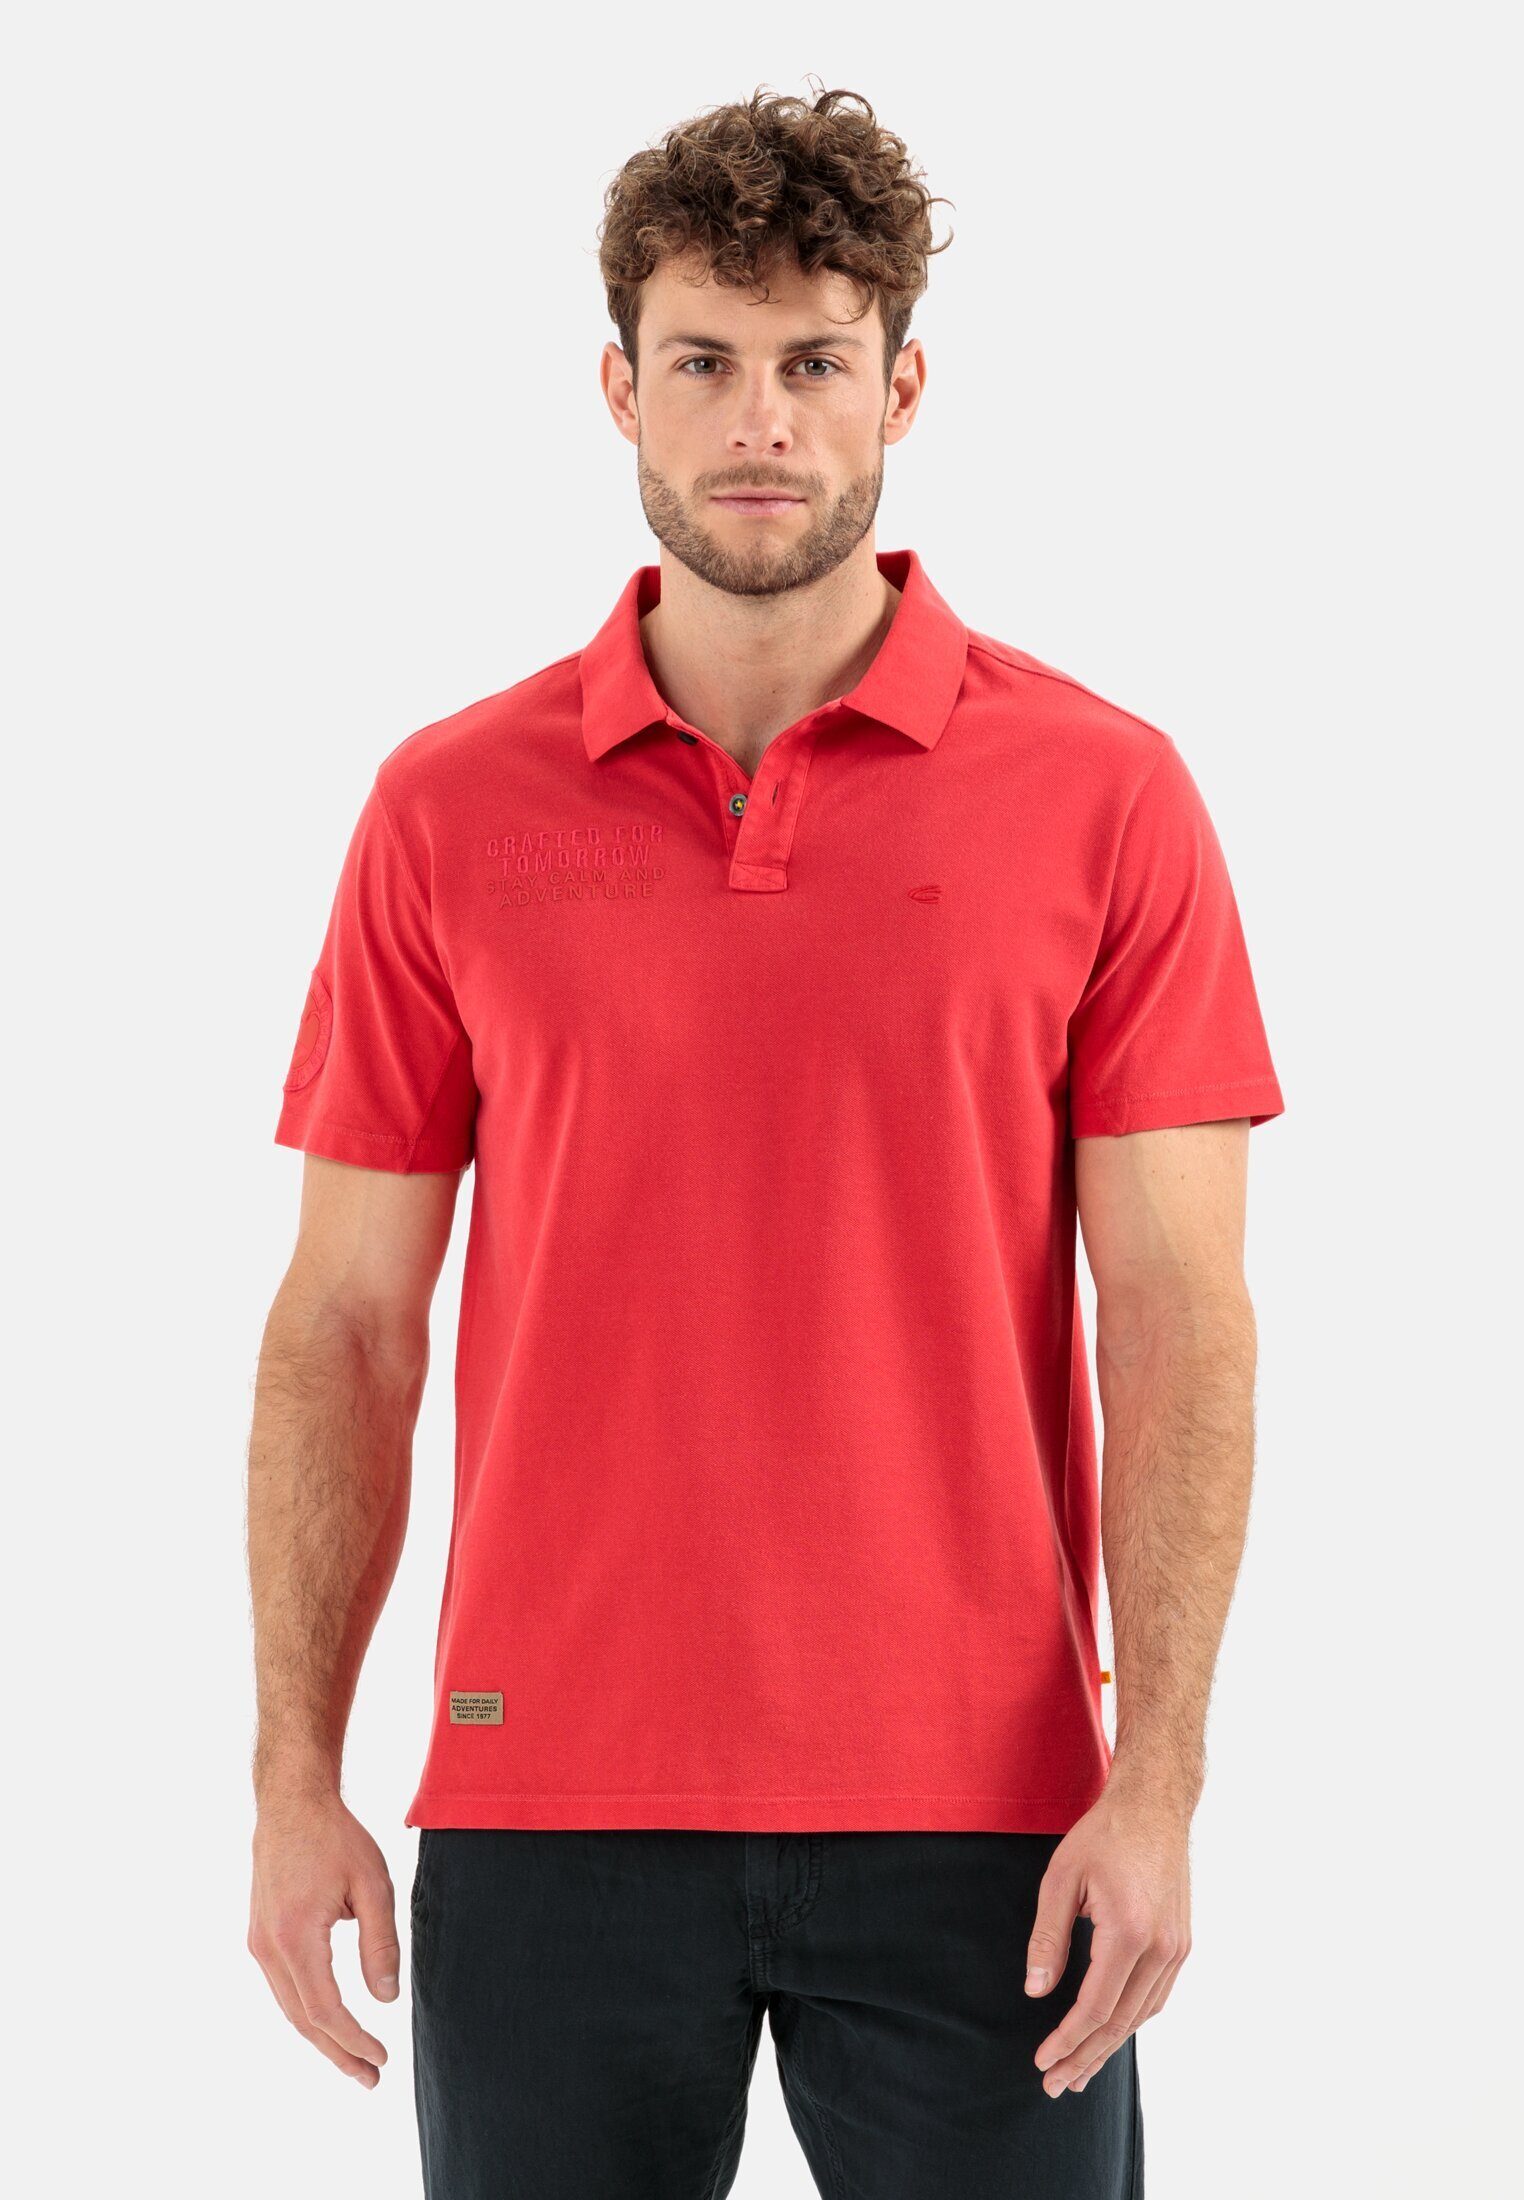 camel active Rot reiner Baumwolle Poloshirt aus Shirts_Poloshirt